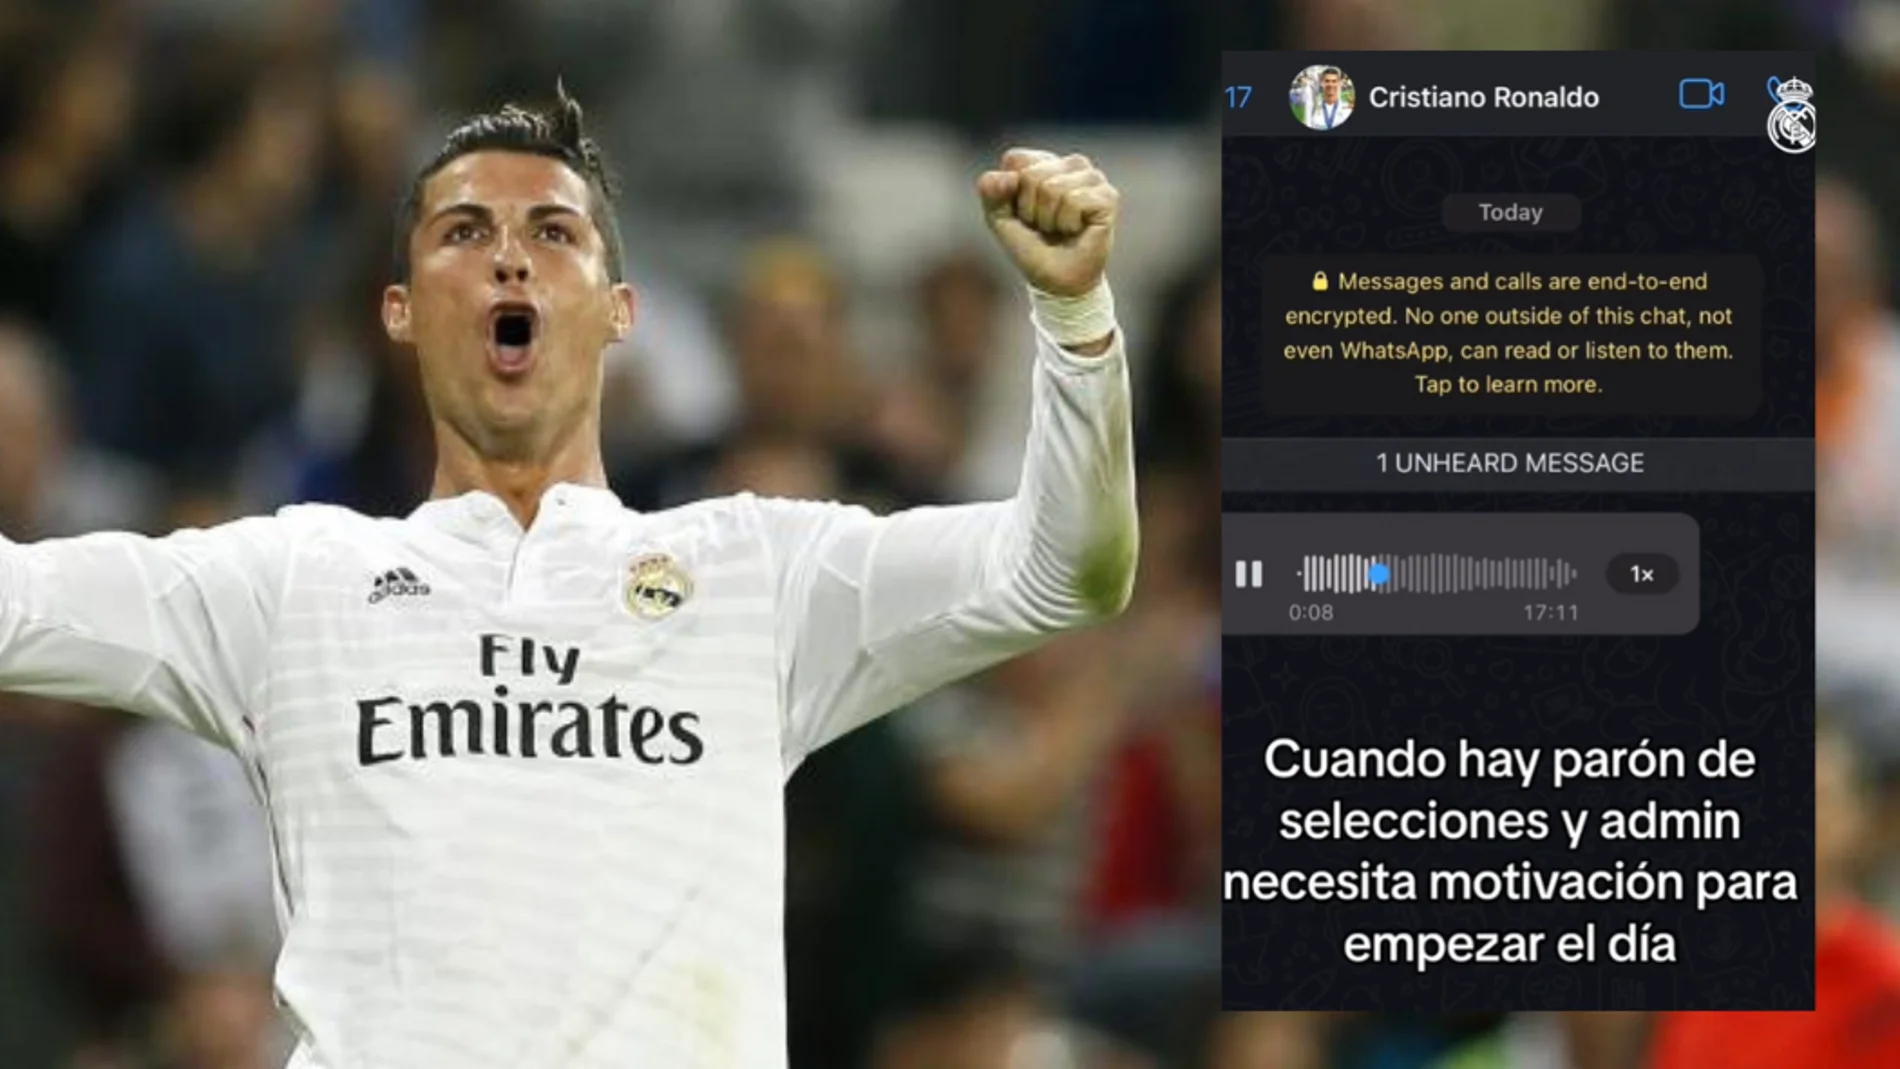 El Real Madrid revoluciona TikTok con un mensaje impactante de Cristiano Ronaldo